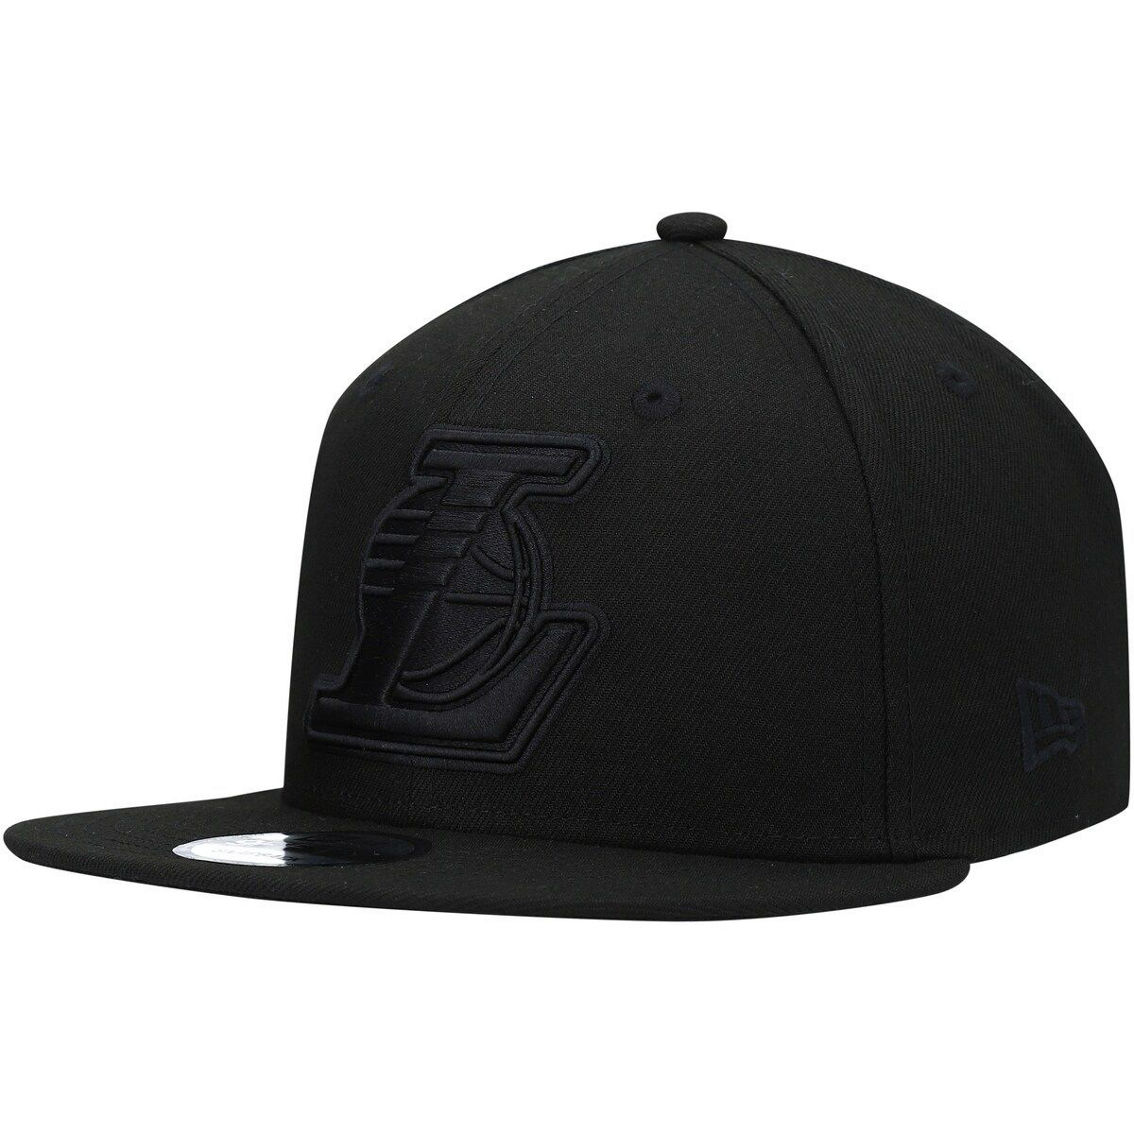 New Era Men's Los Angeles Lakers Black On Black 9FIFTY Snapback Hat - Image 2 of 4